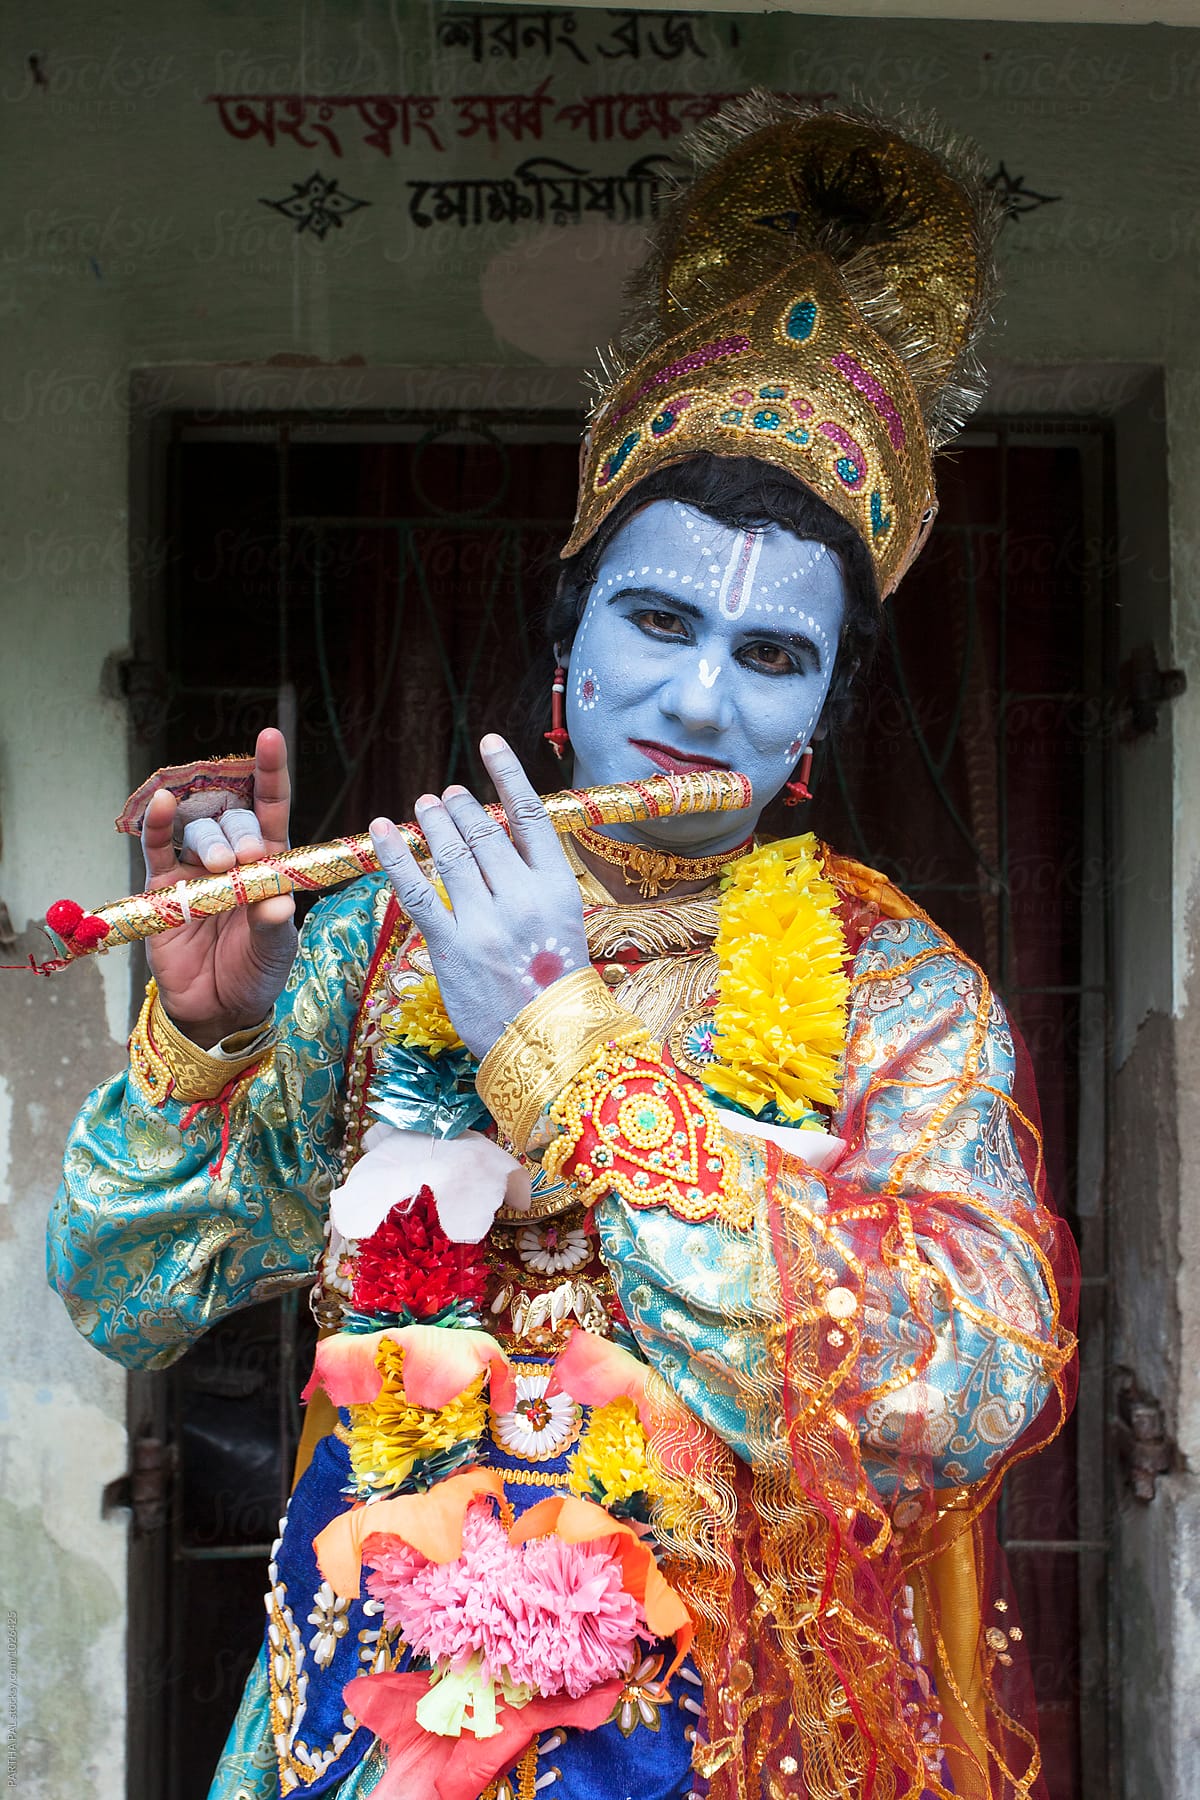 A BAHURUPI decorated himseld as Hindu God KRISHNA